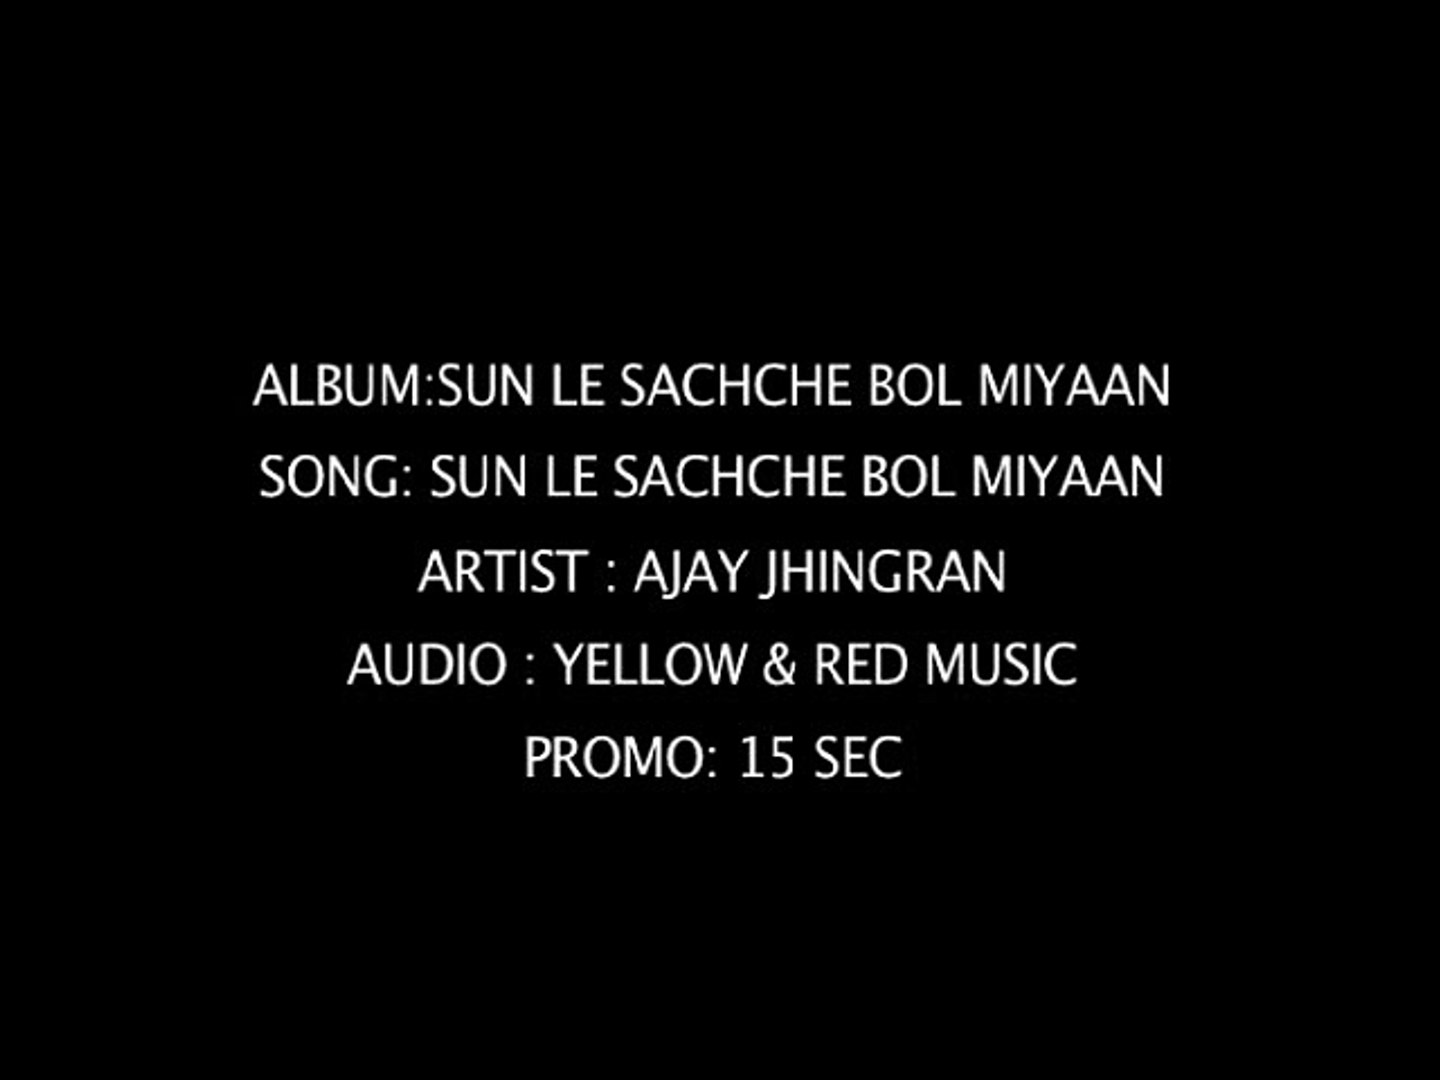 Sun Le Sachche Bol Miyan 15 Sec Promo - video Dailymotion